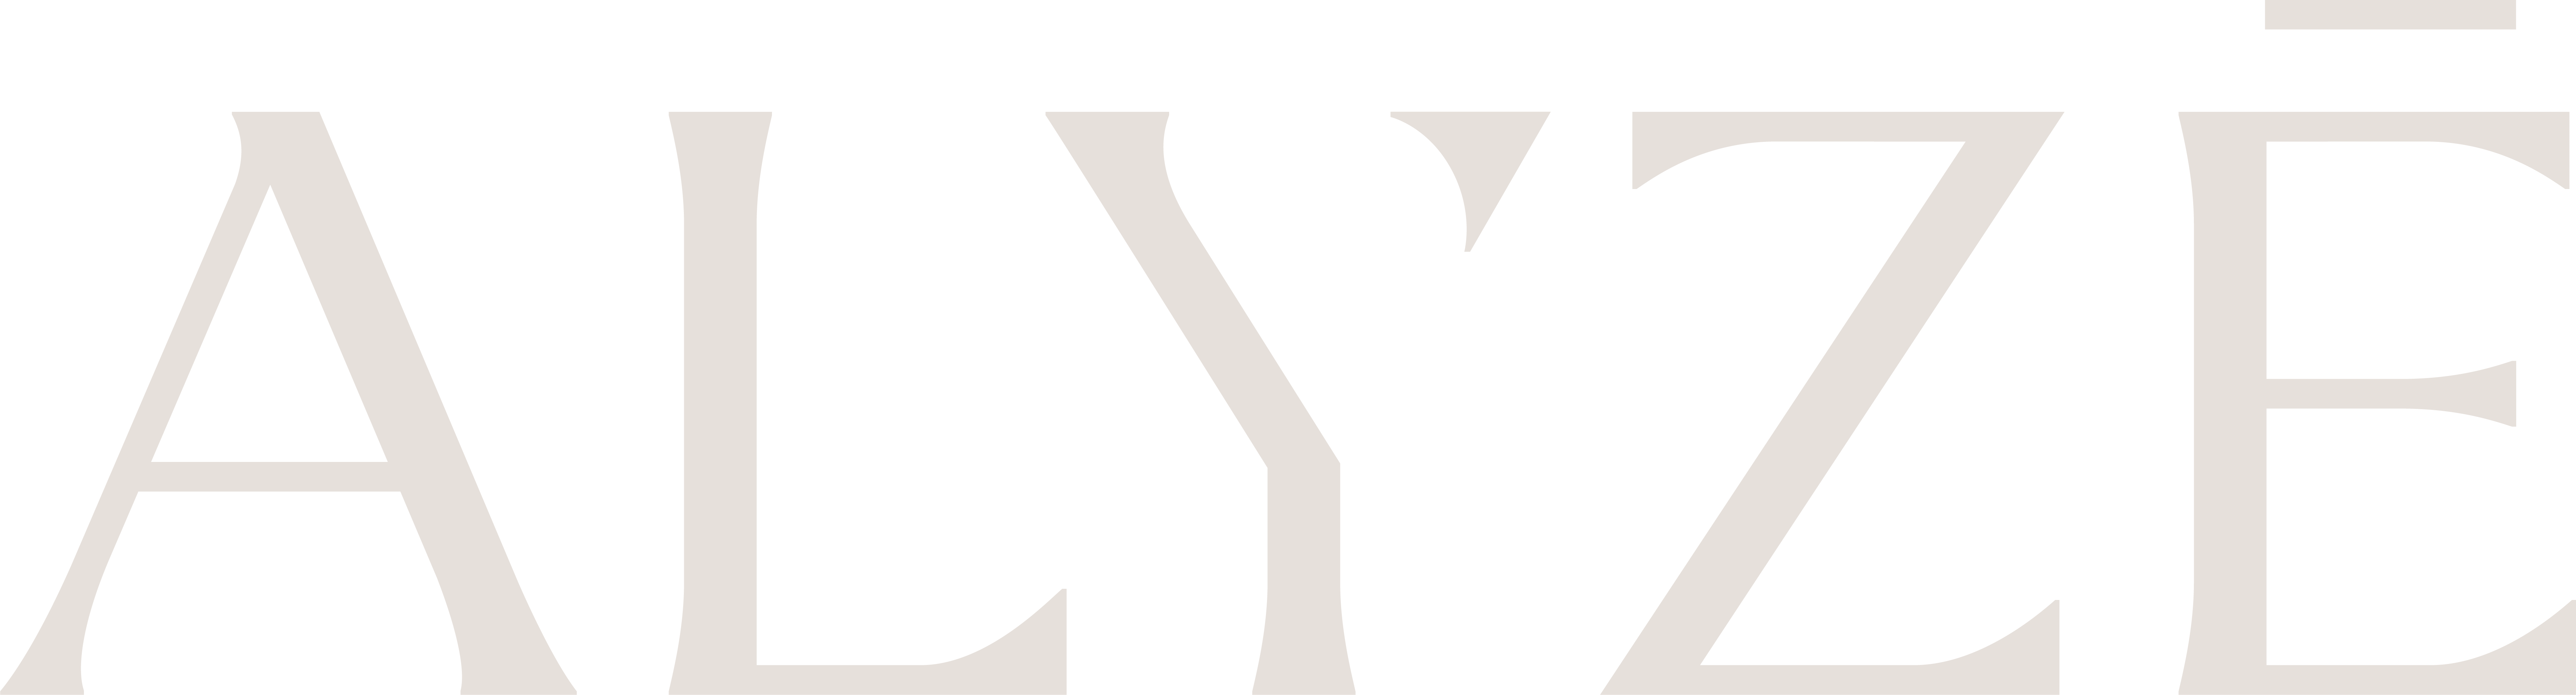 Logotype_Beige_SansBord-1